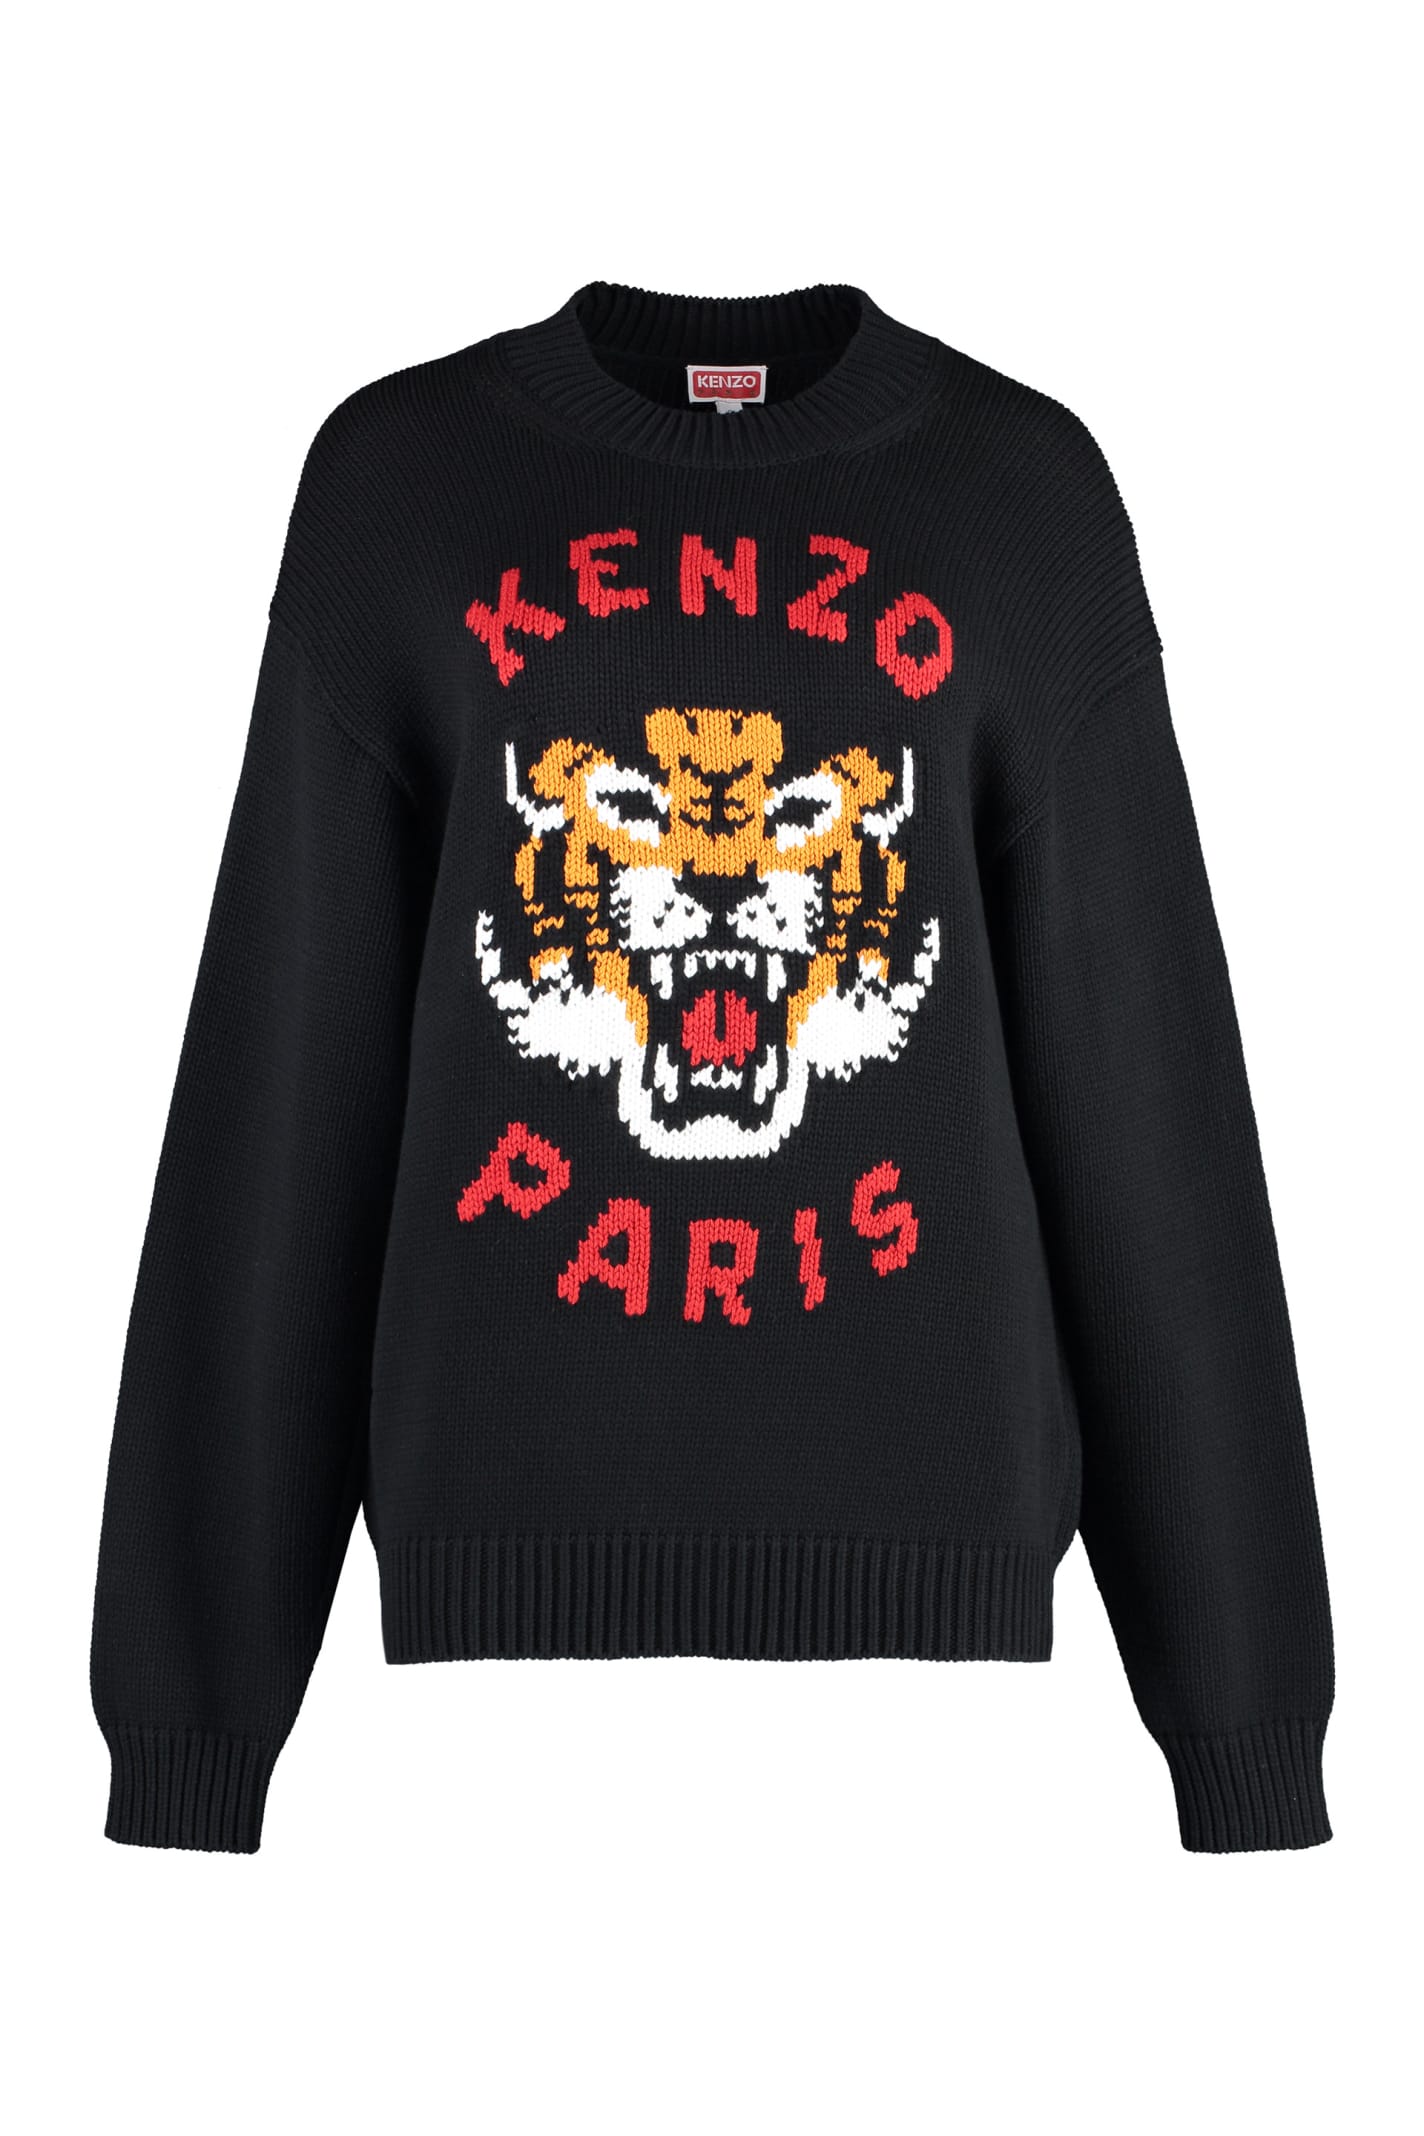 Kenzo Cotton Blend Crew-neck Sweater In Black